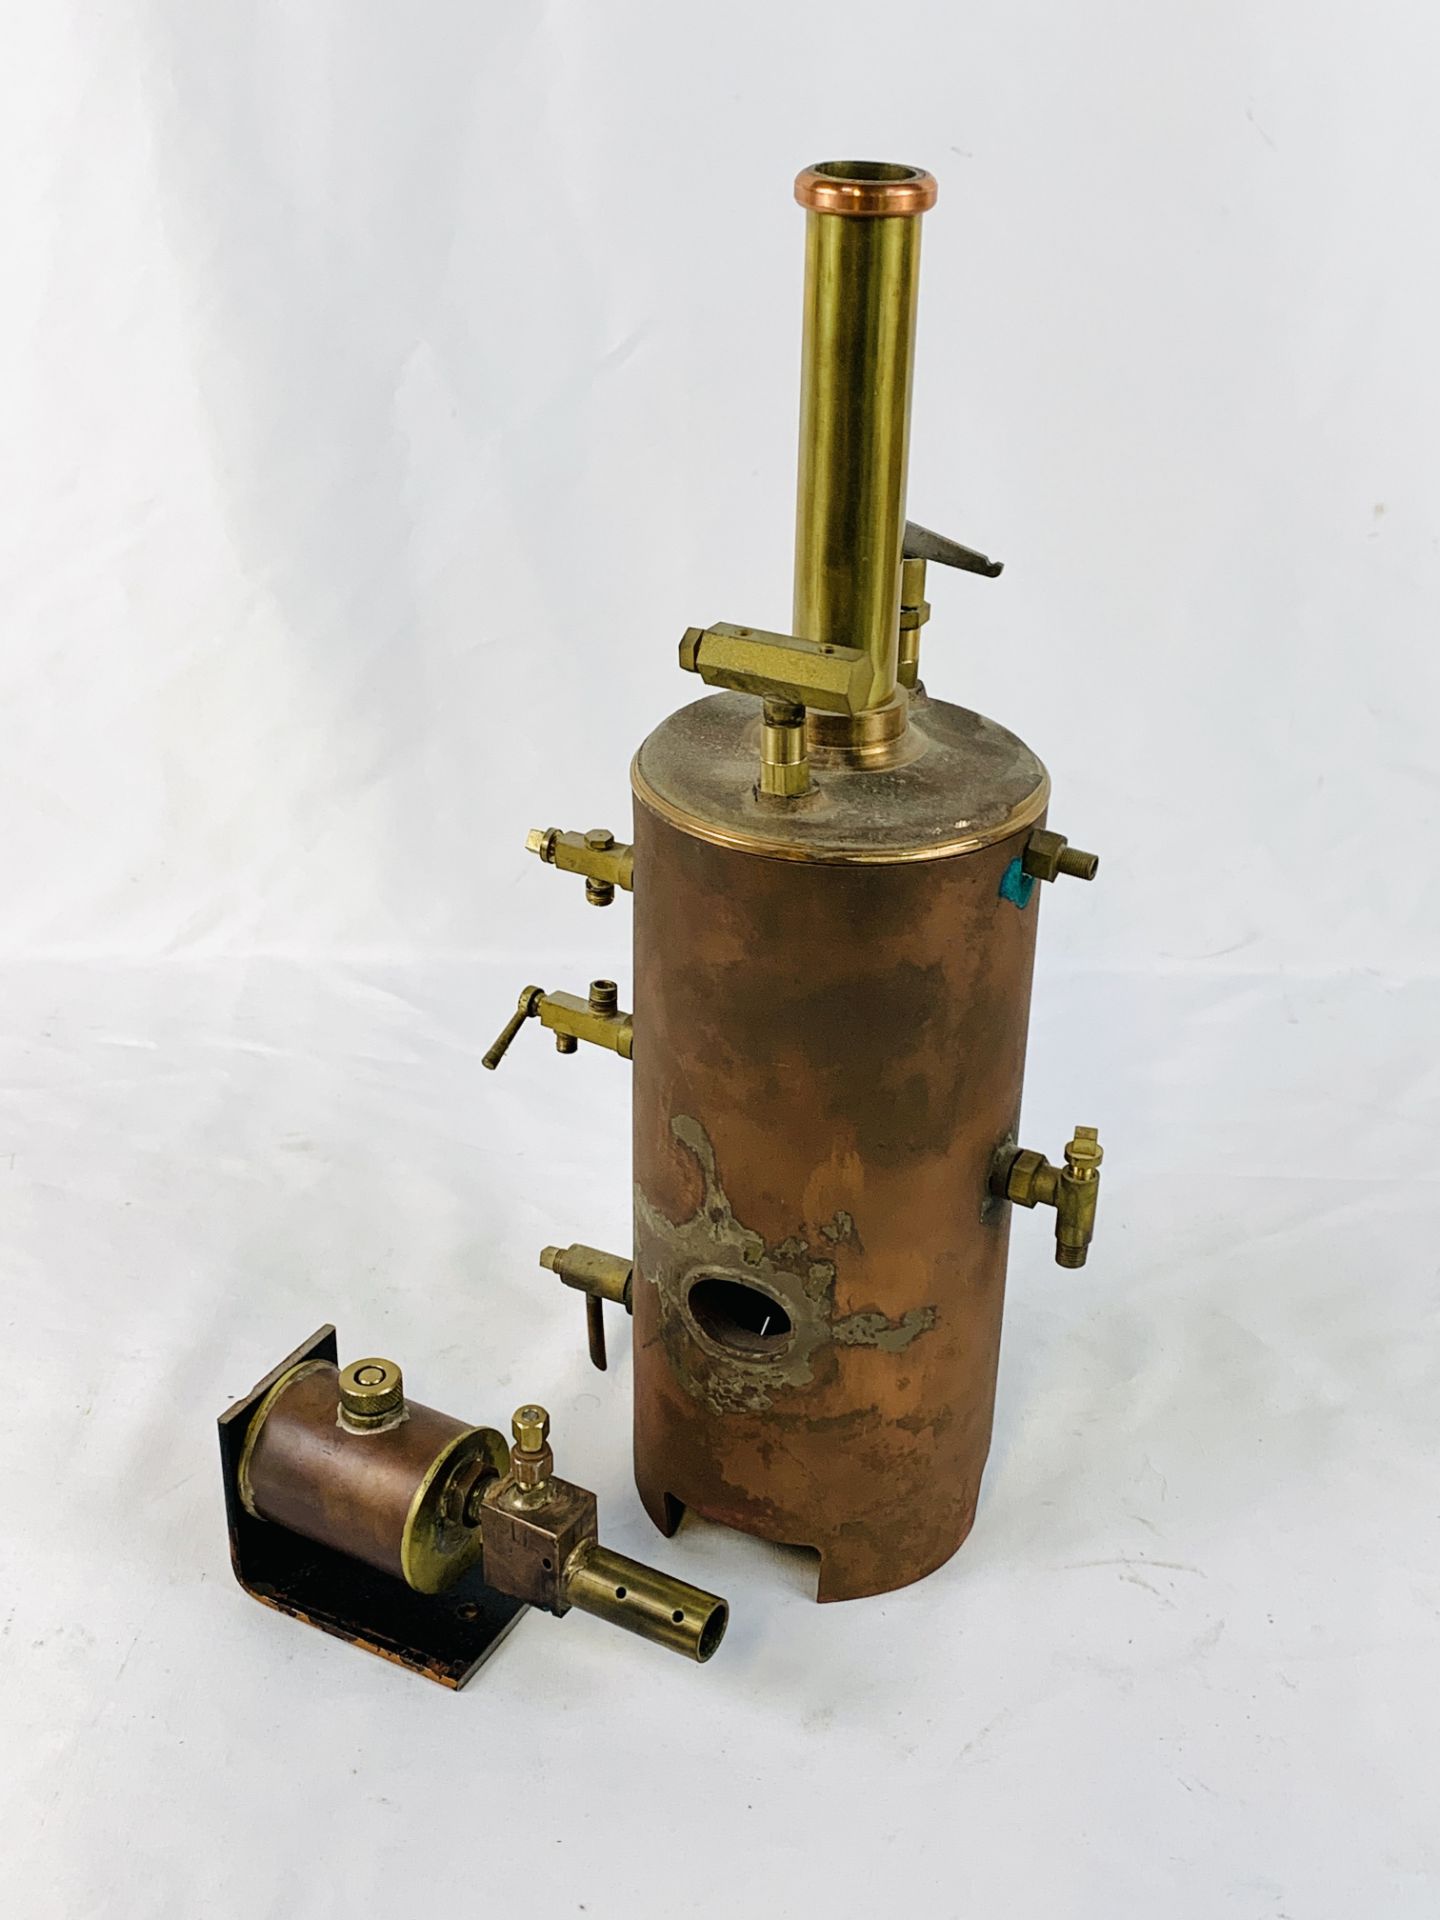 Copper boiler with plans by Kenison Bros (Hertford) Ltd.